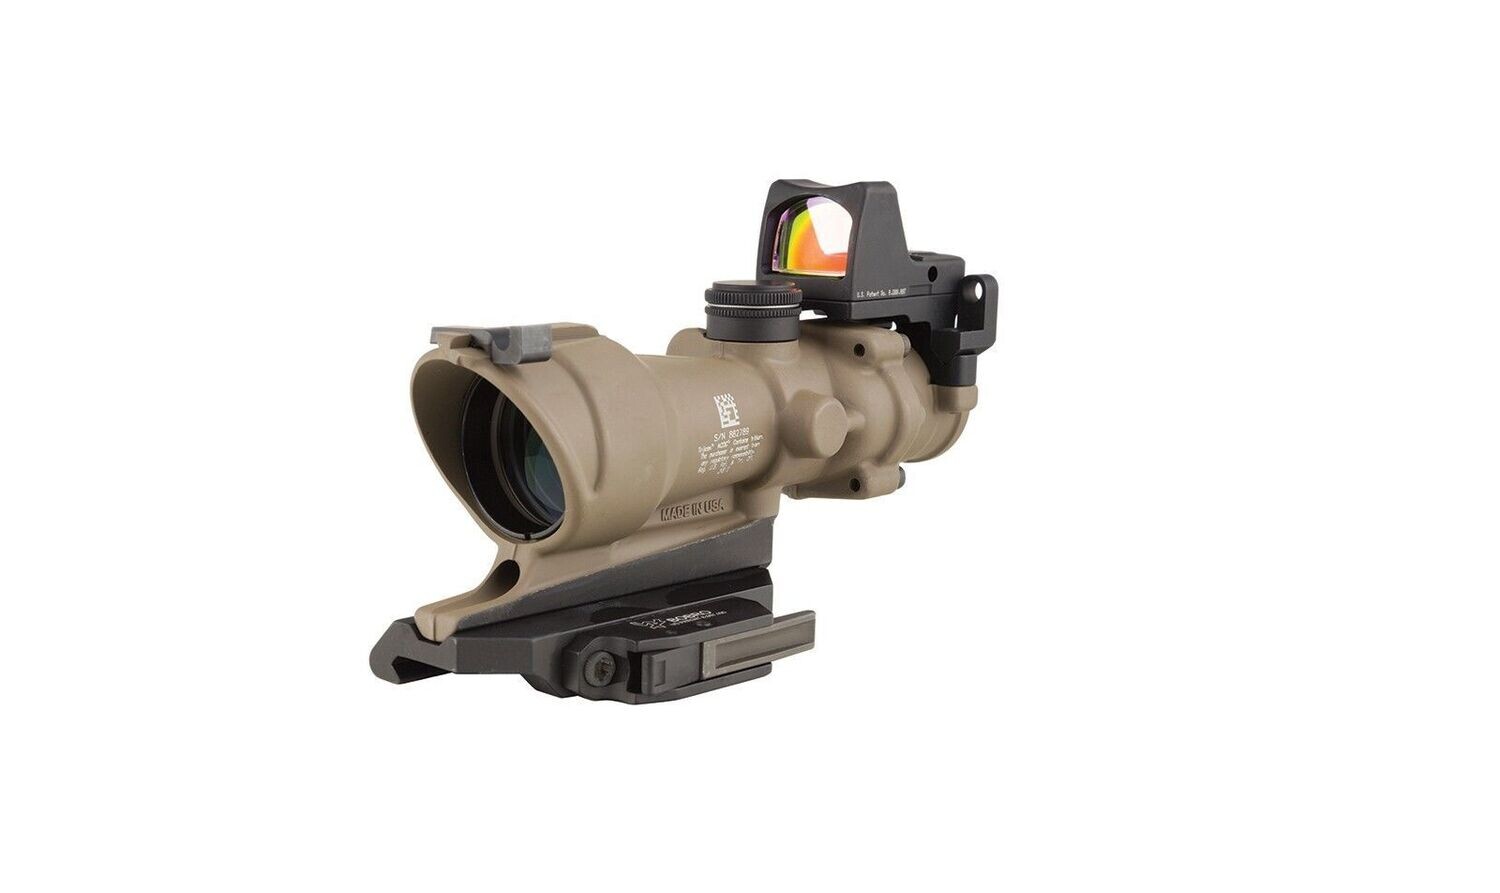 ACOG 4x32 ECOS Tritium Riflescope w/ Trijicon RMR
Trijicon